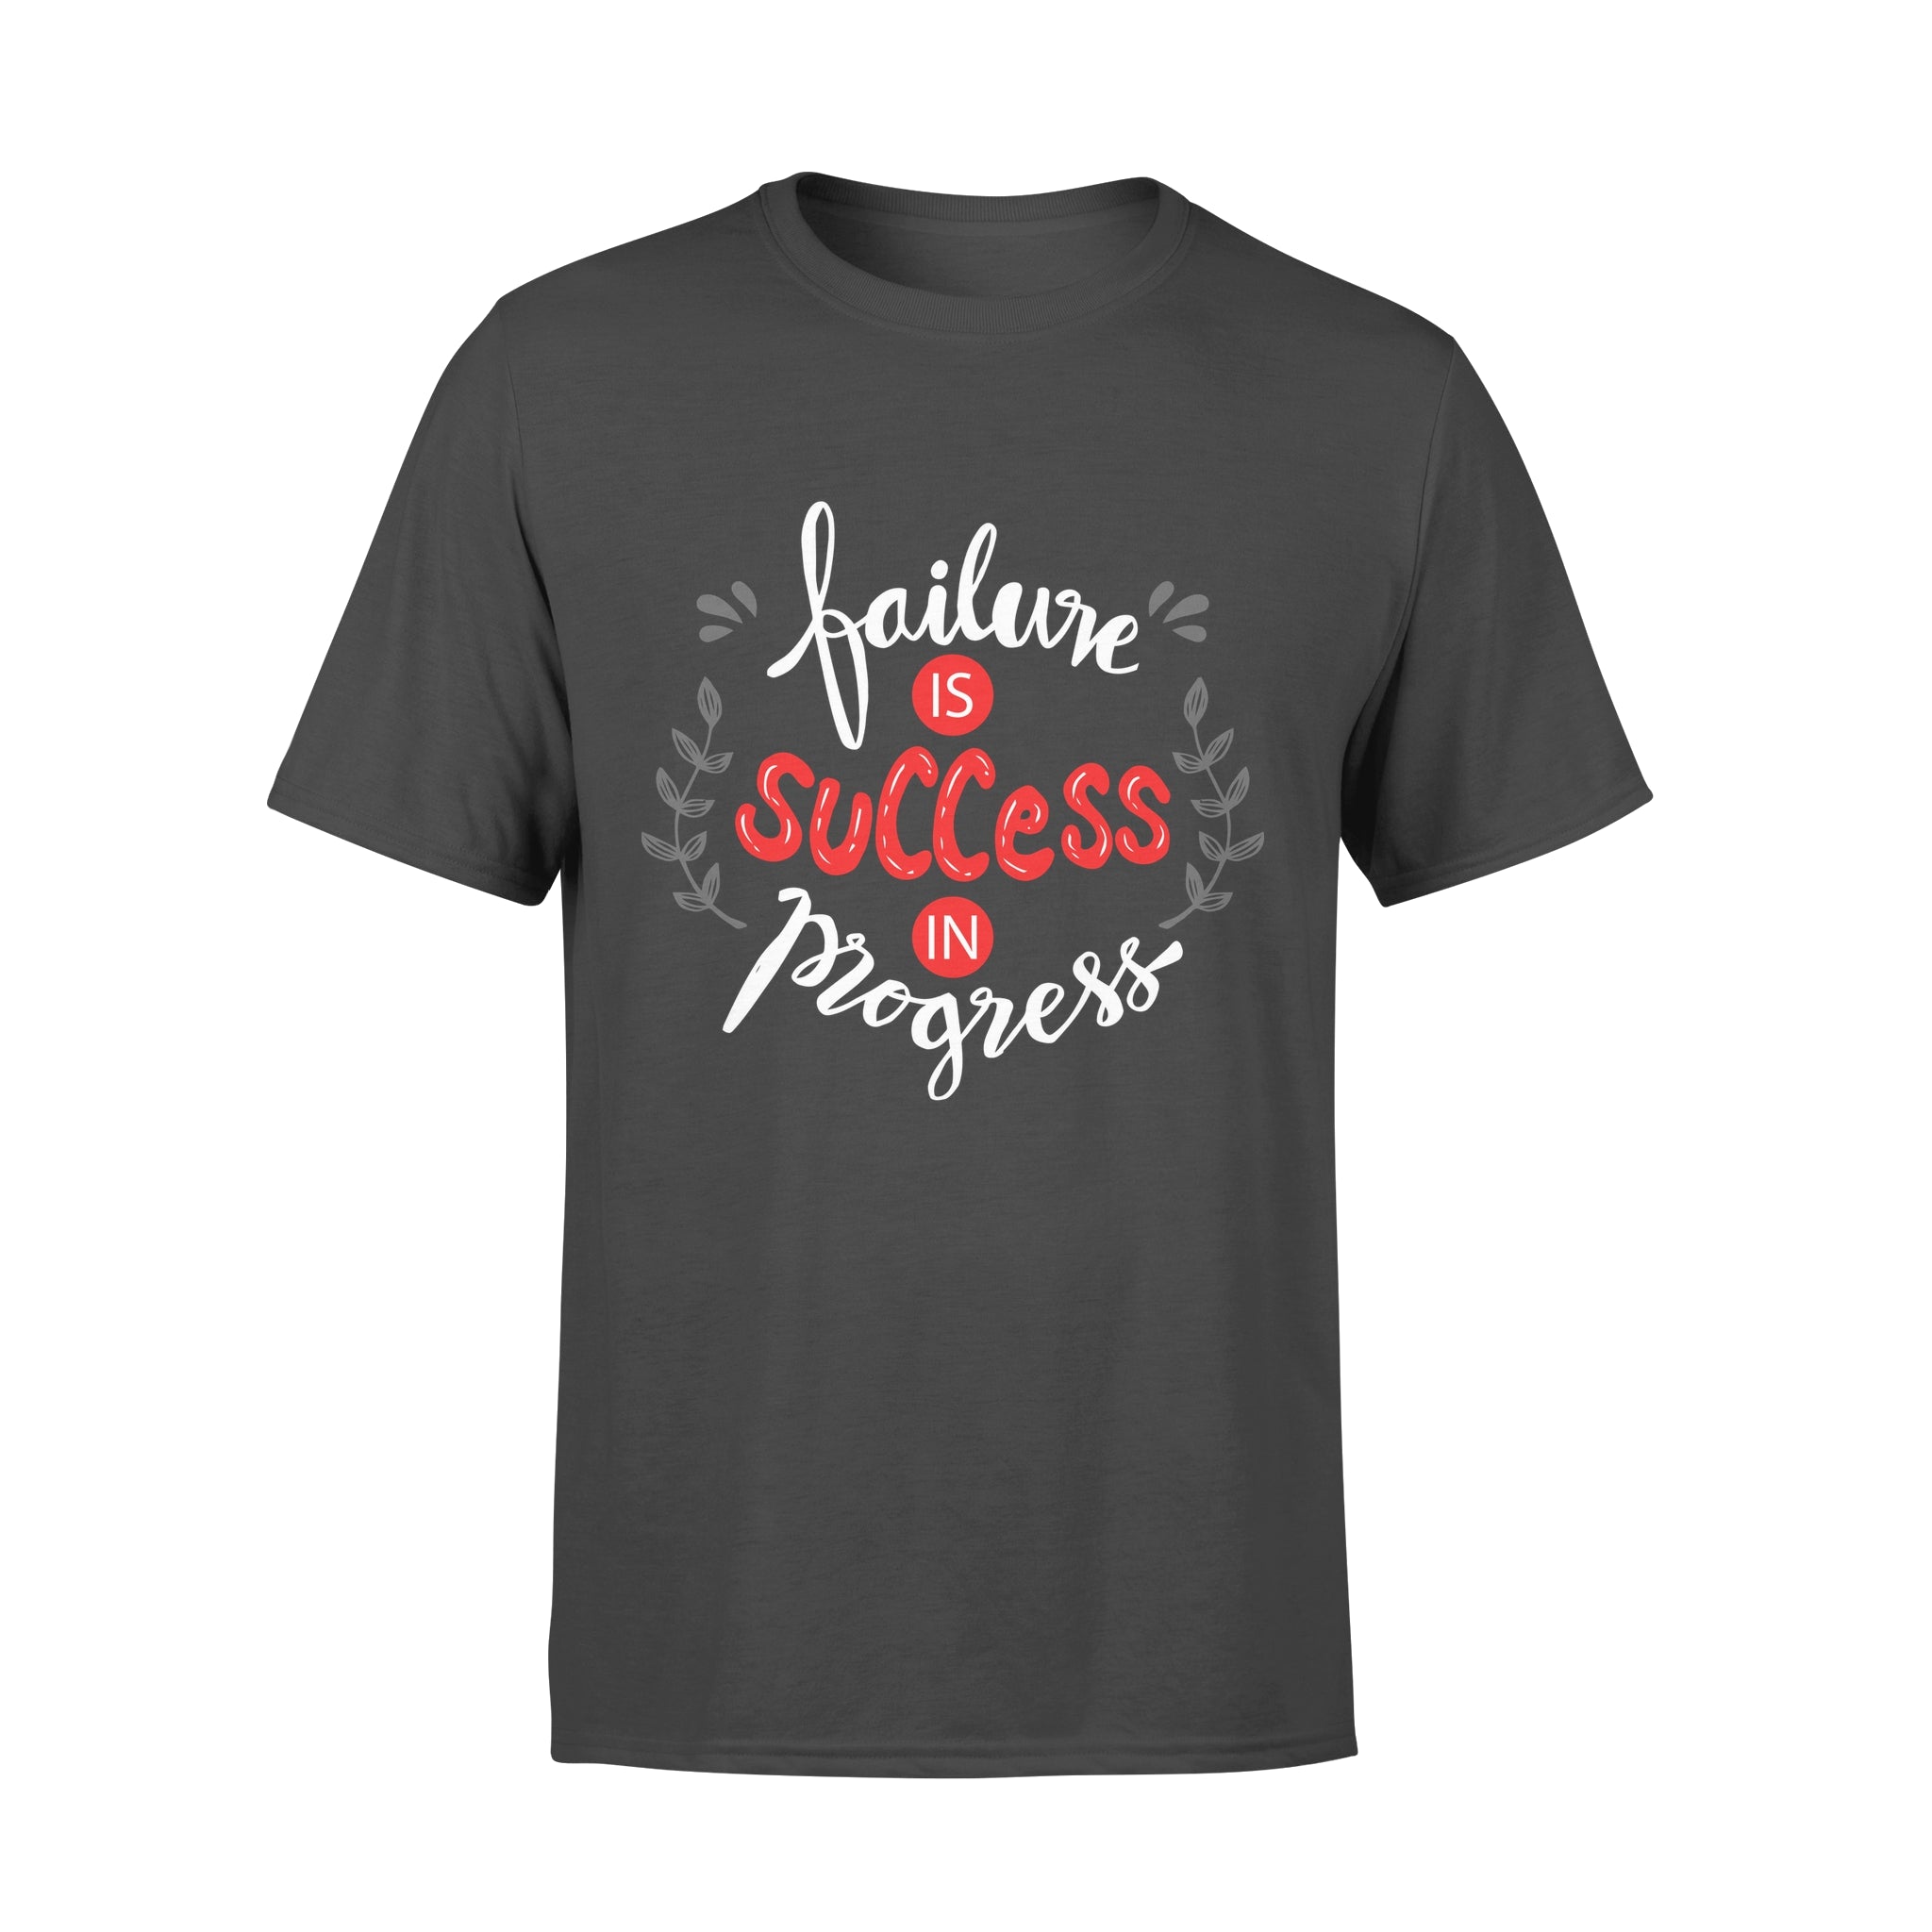 Failure Is Success In Progress - T-shirt